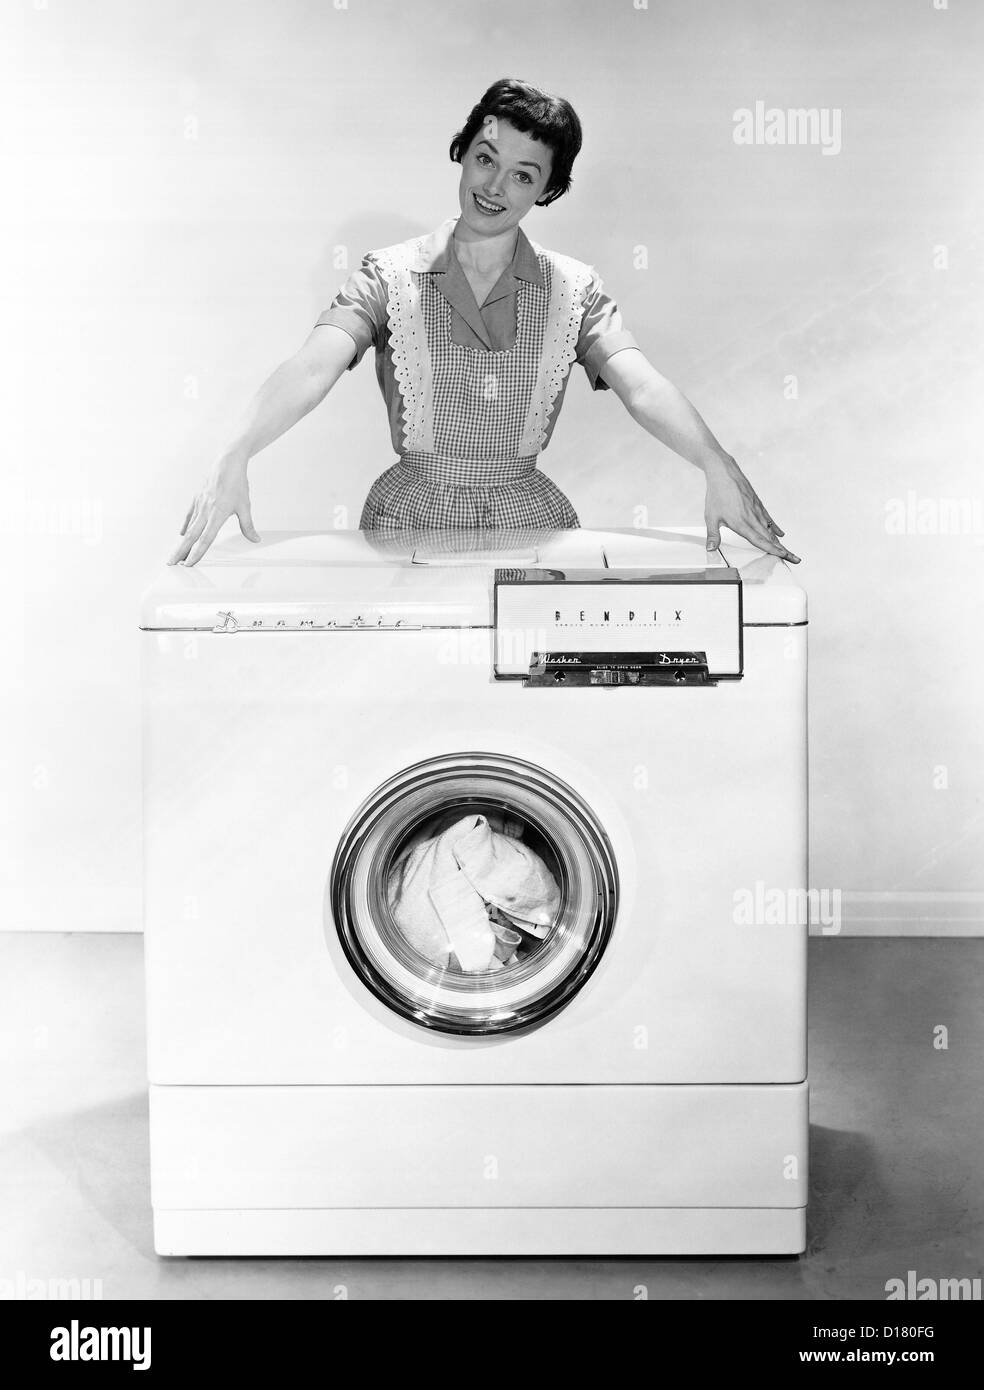 Woman posing with washing machine Stock Photo